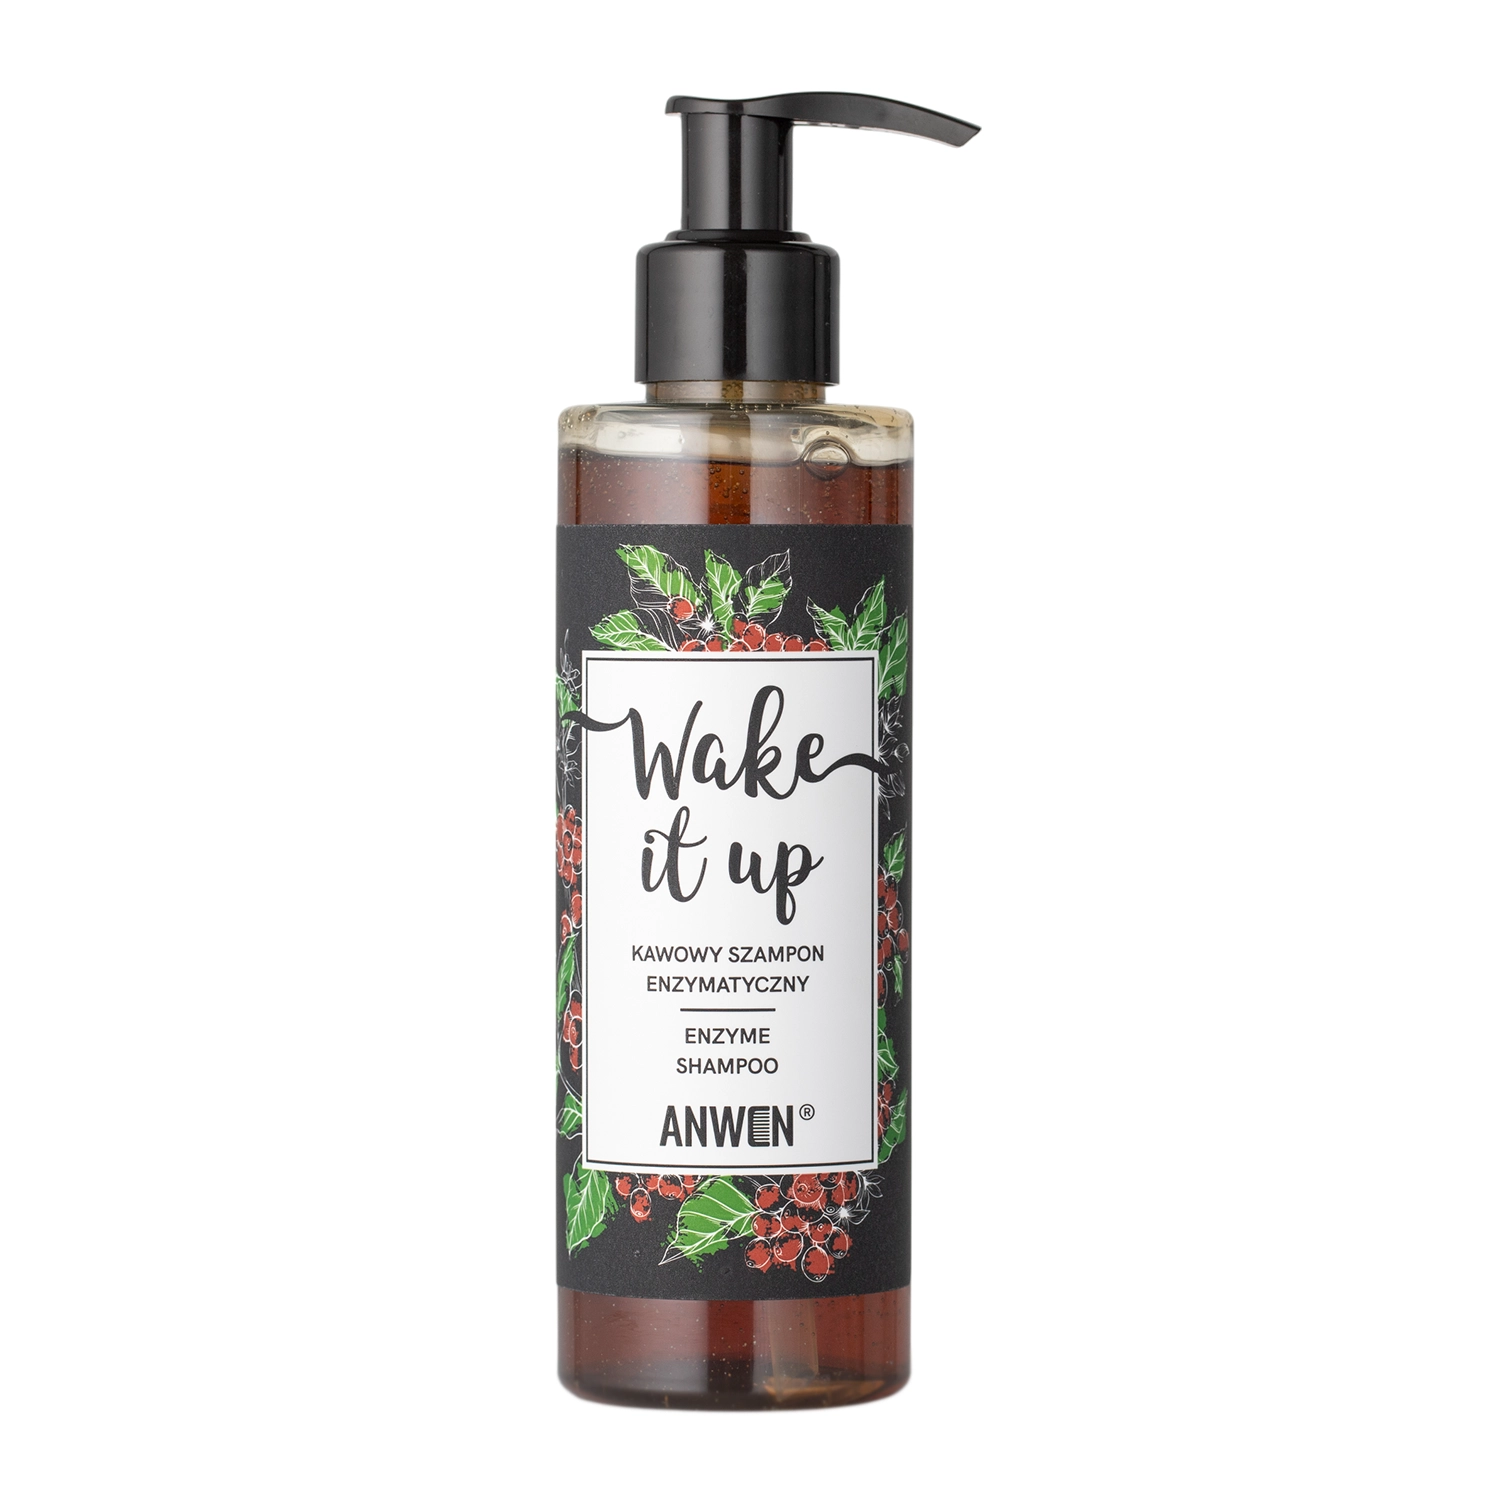 Anwen - Wake It Up - Kaffee-Enzym-Shampoo - 200ml